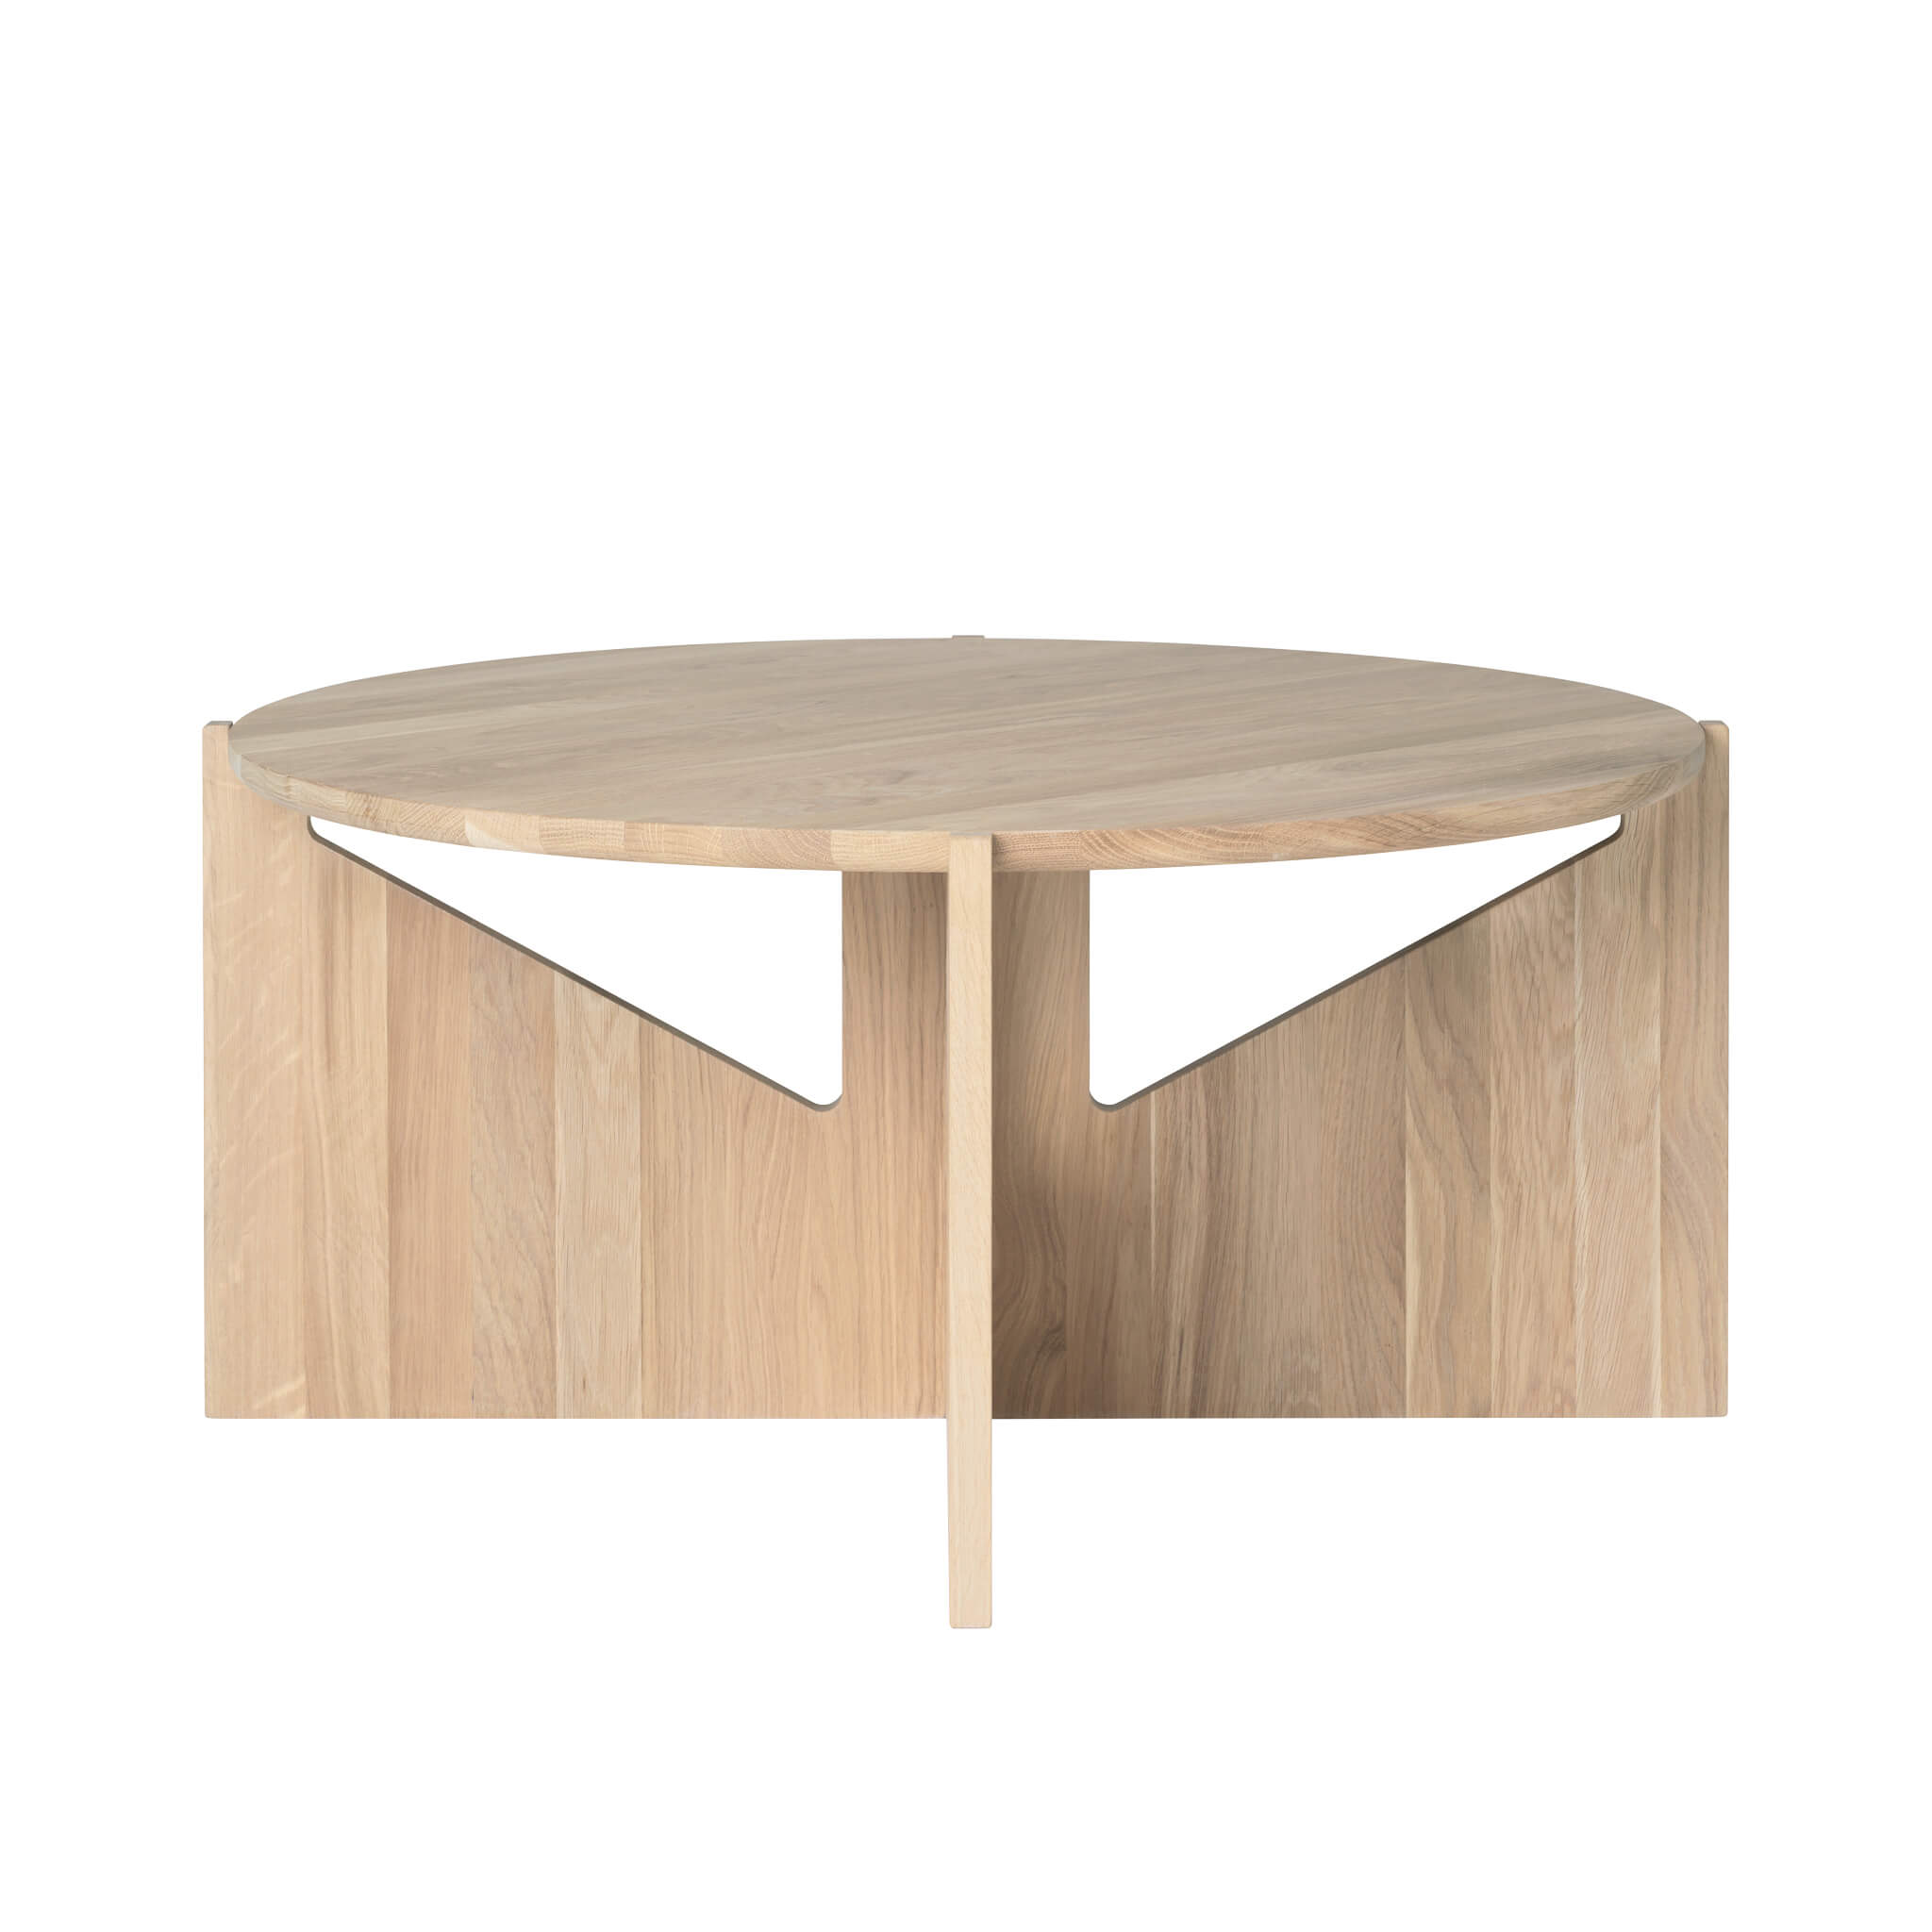 kristina dam studio XL table oak buy online